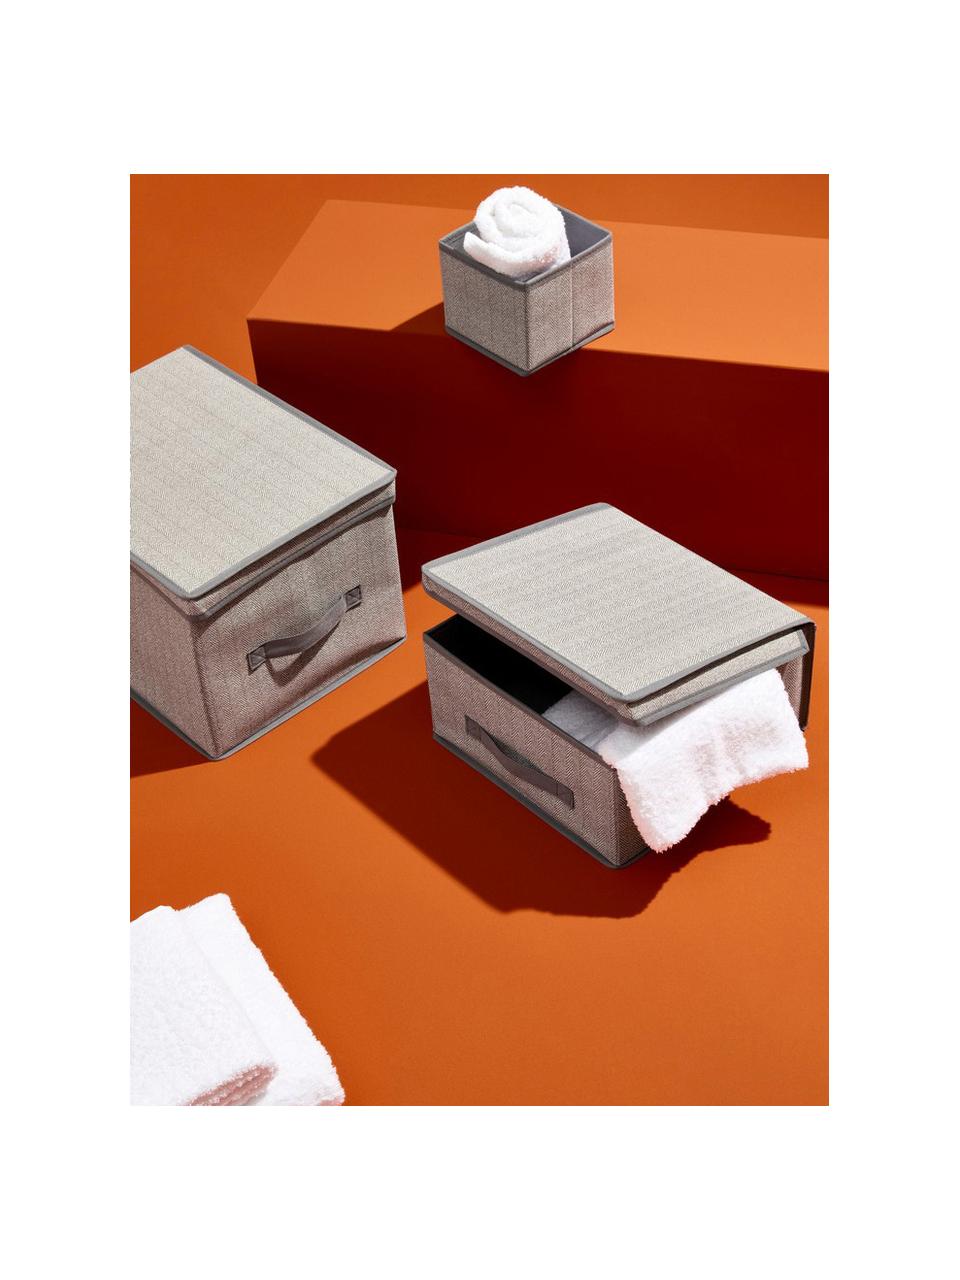 Caja plegable Tidy, An 40 cm, Tapizado: fibra sintética, Tonos grises, An 40 x F 30 cm